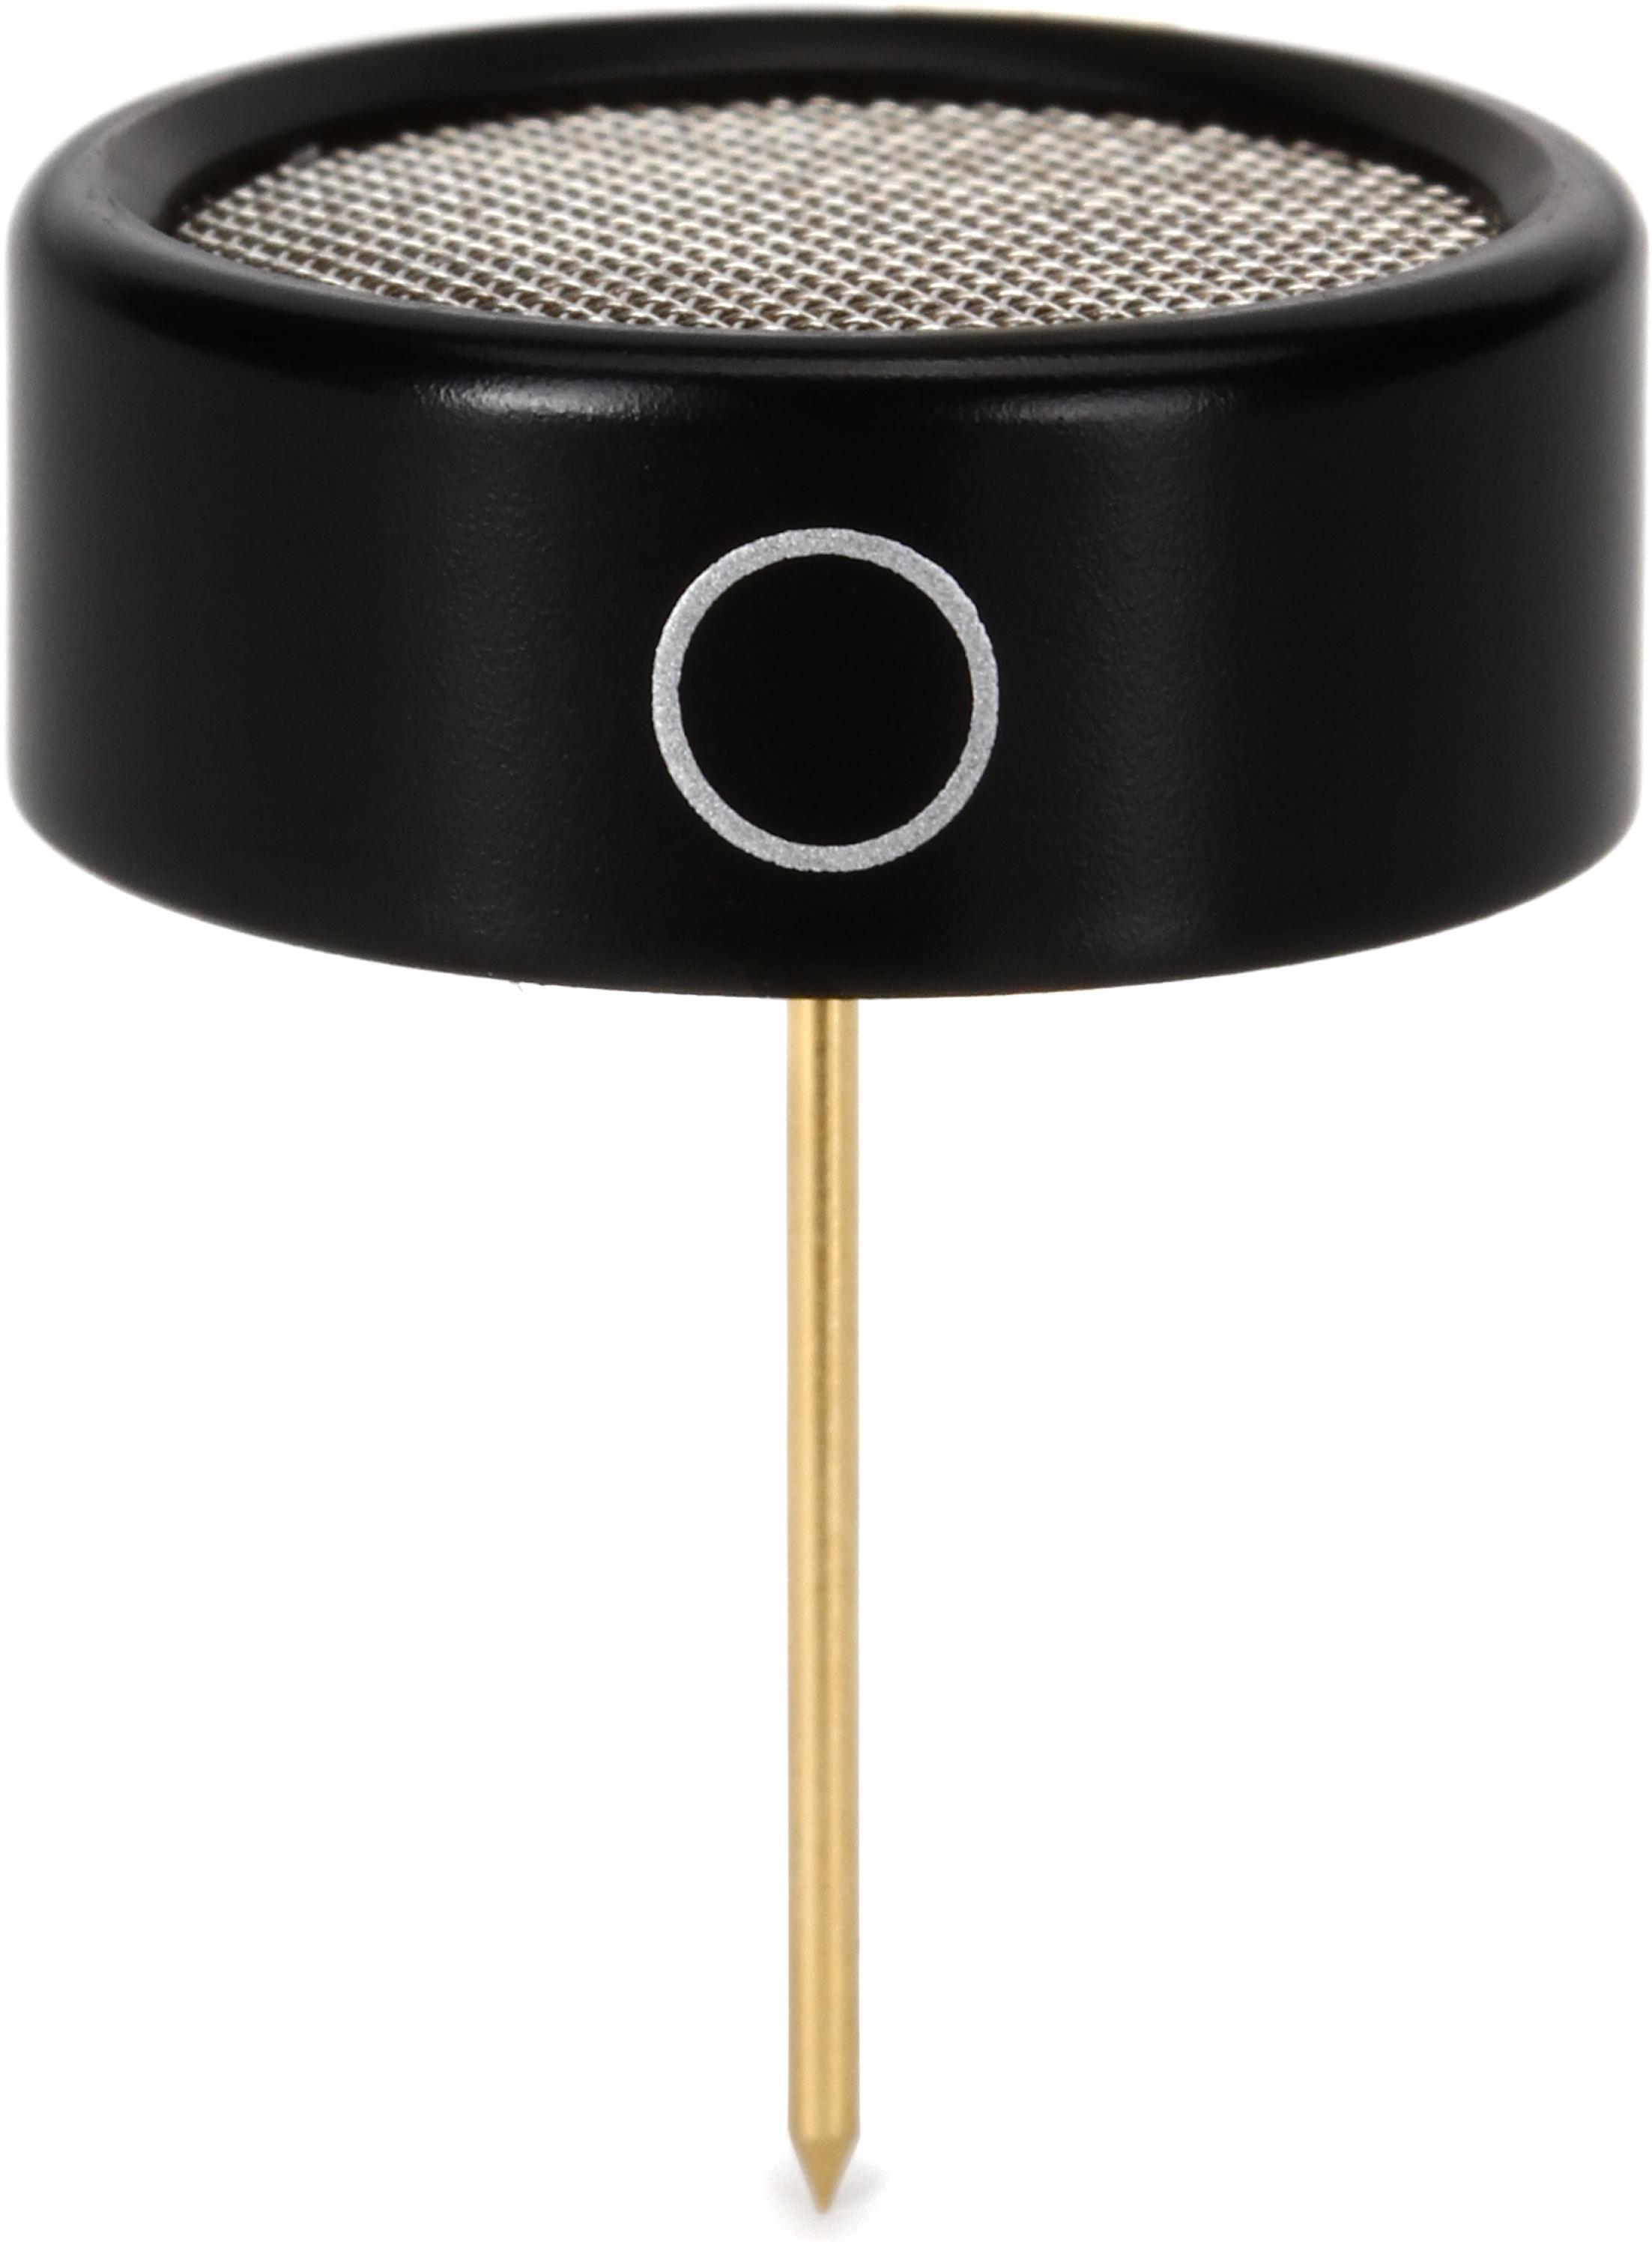 Warm Audio WA-84 Small-diaphragm Condenser Microphone - Black 